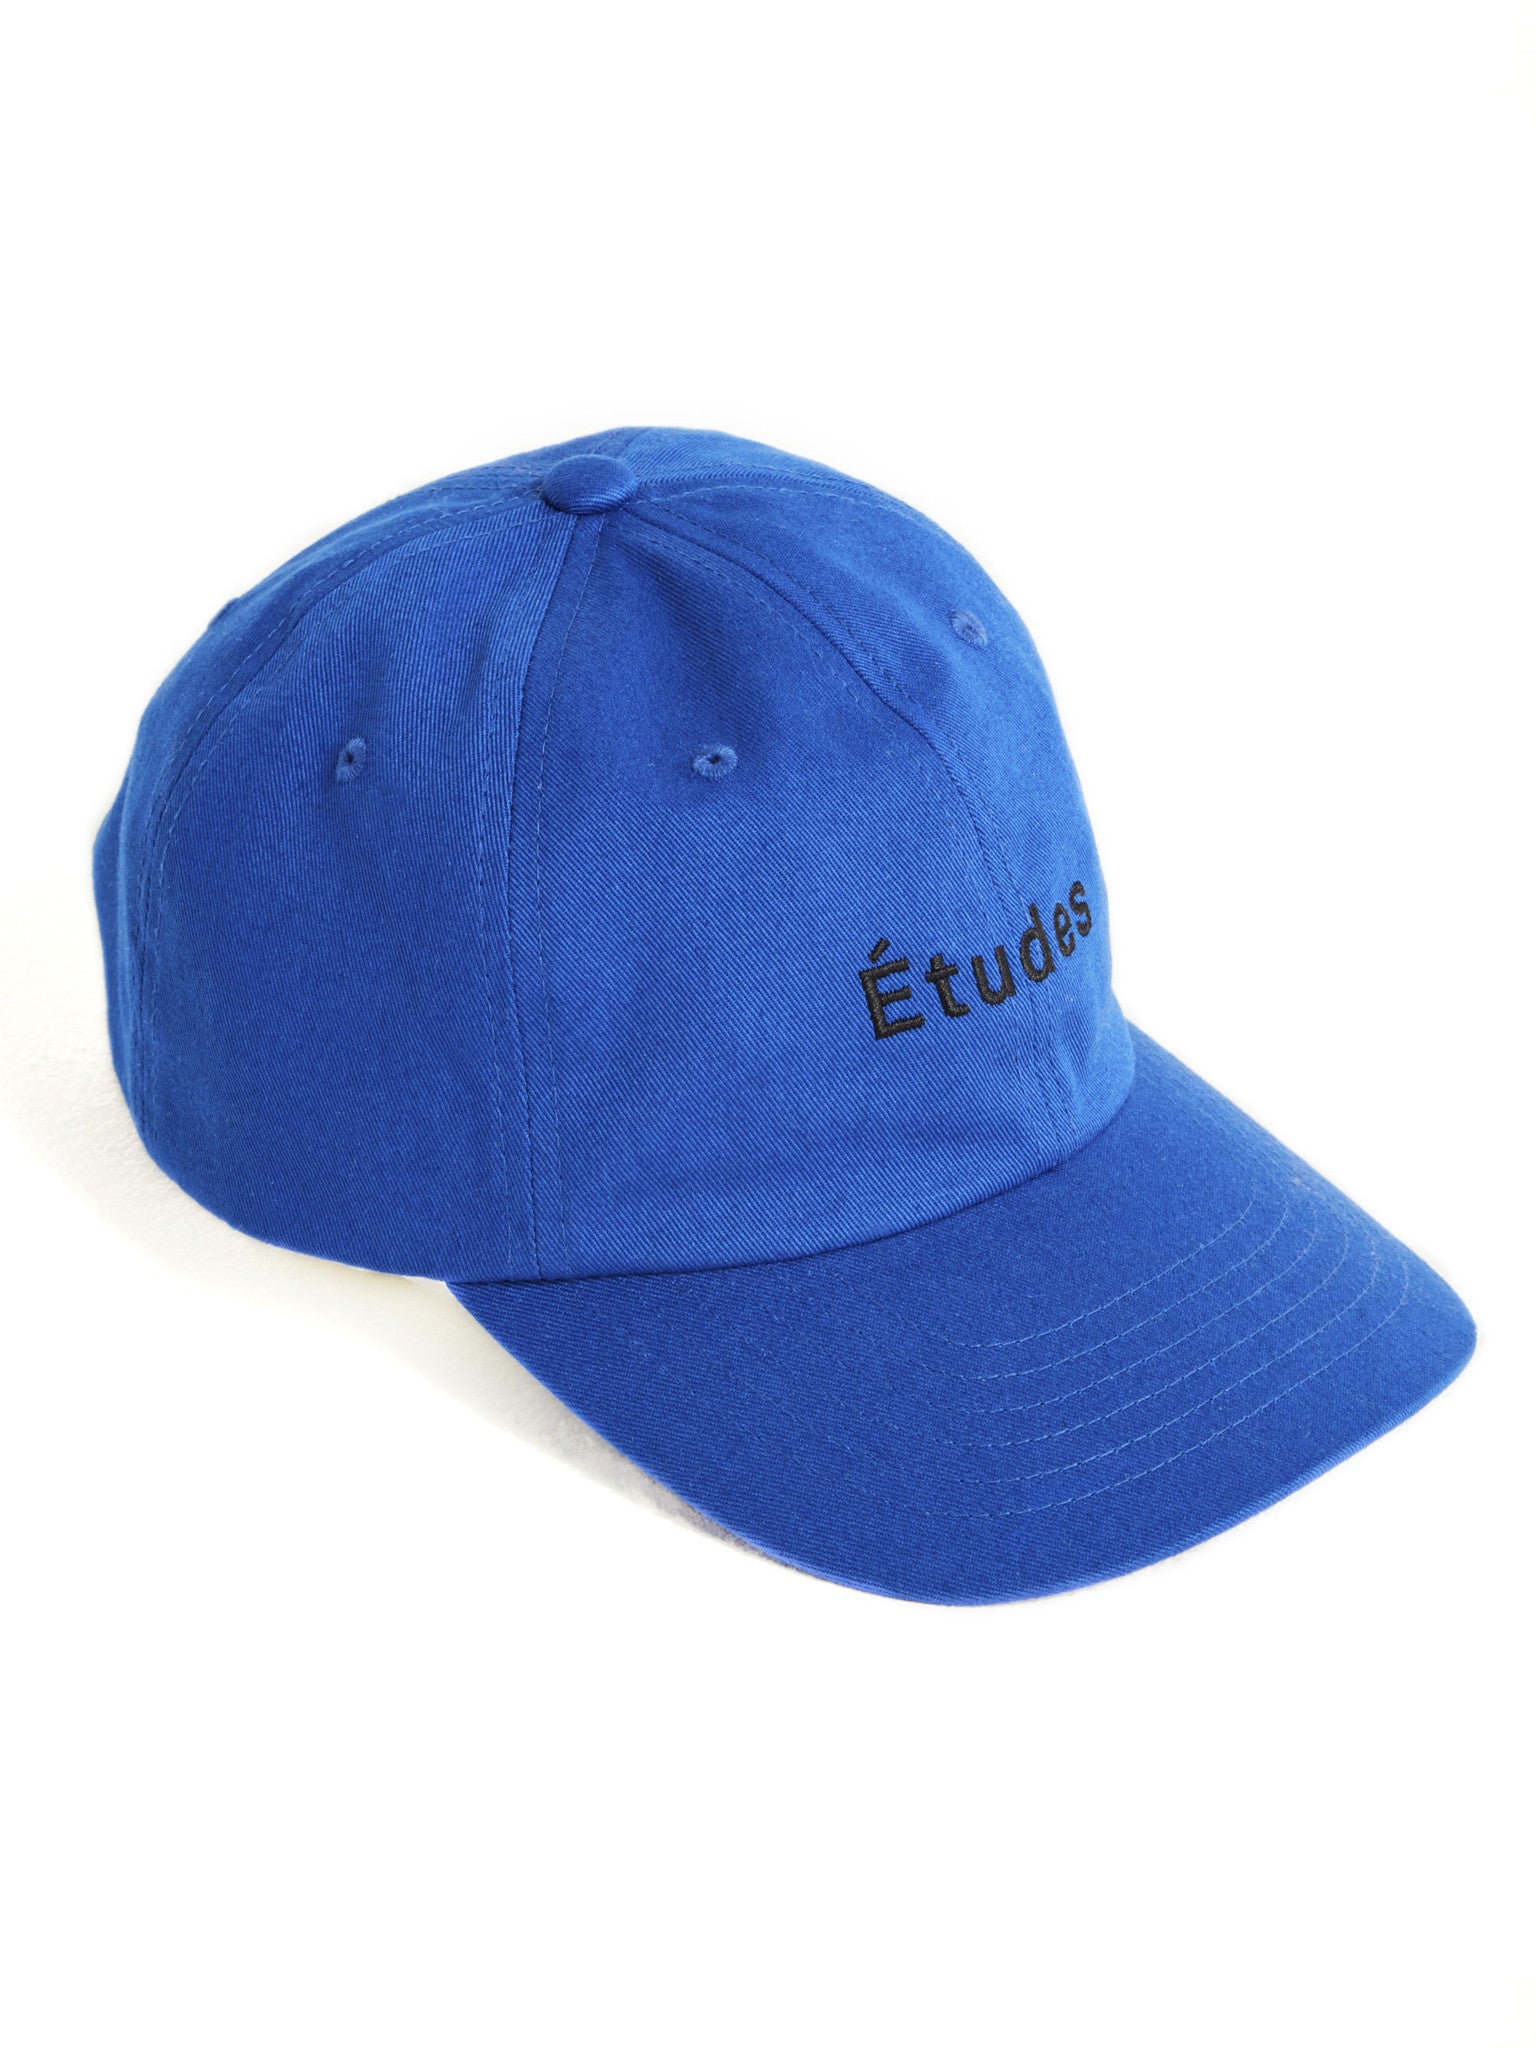 Études Studio - Still Blue Cap